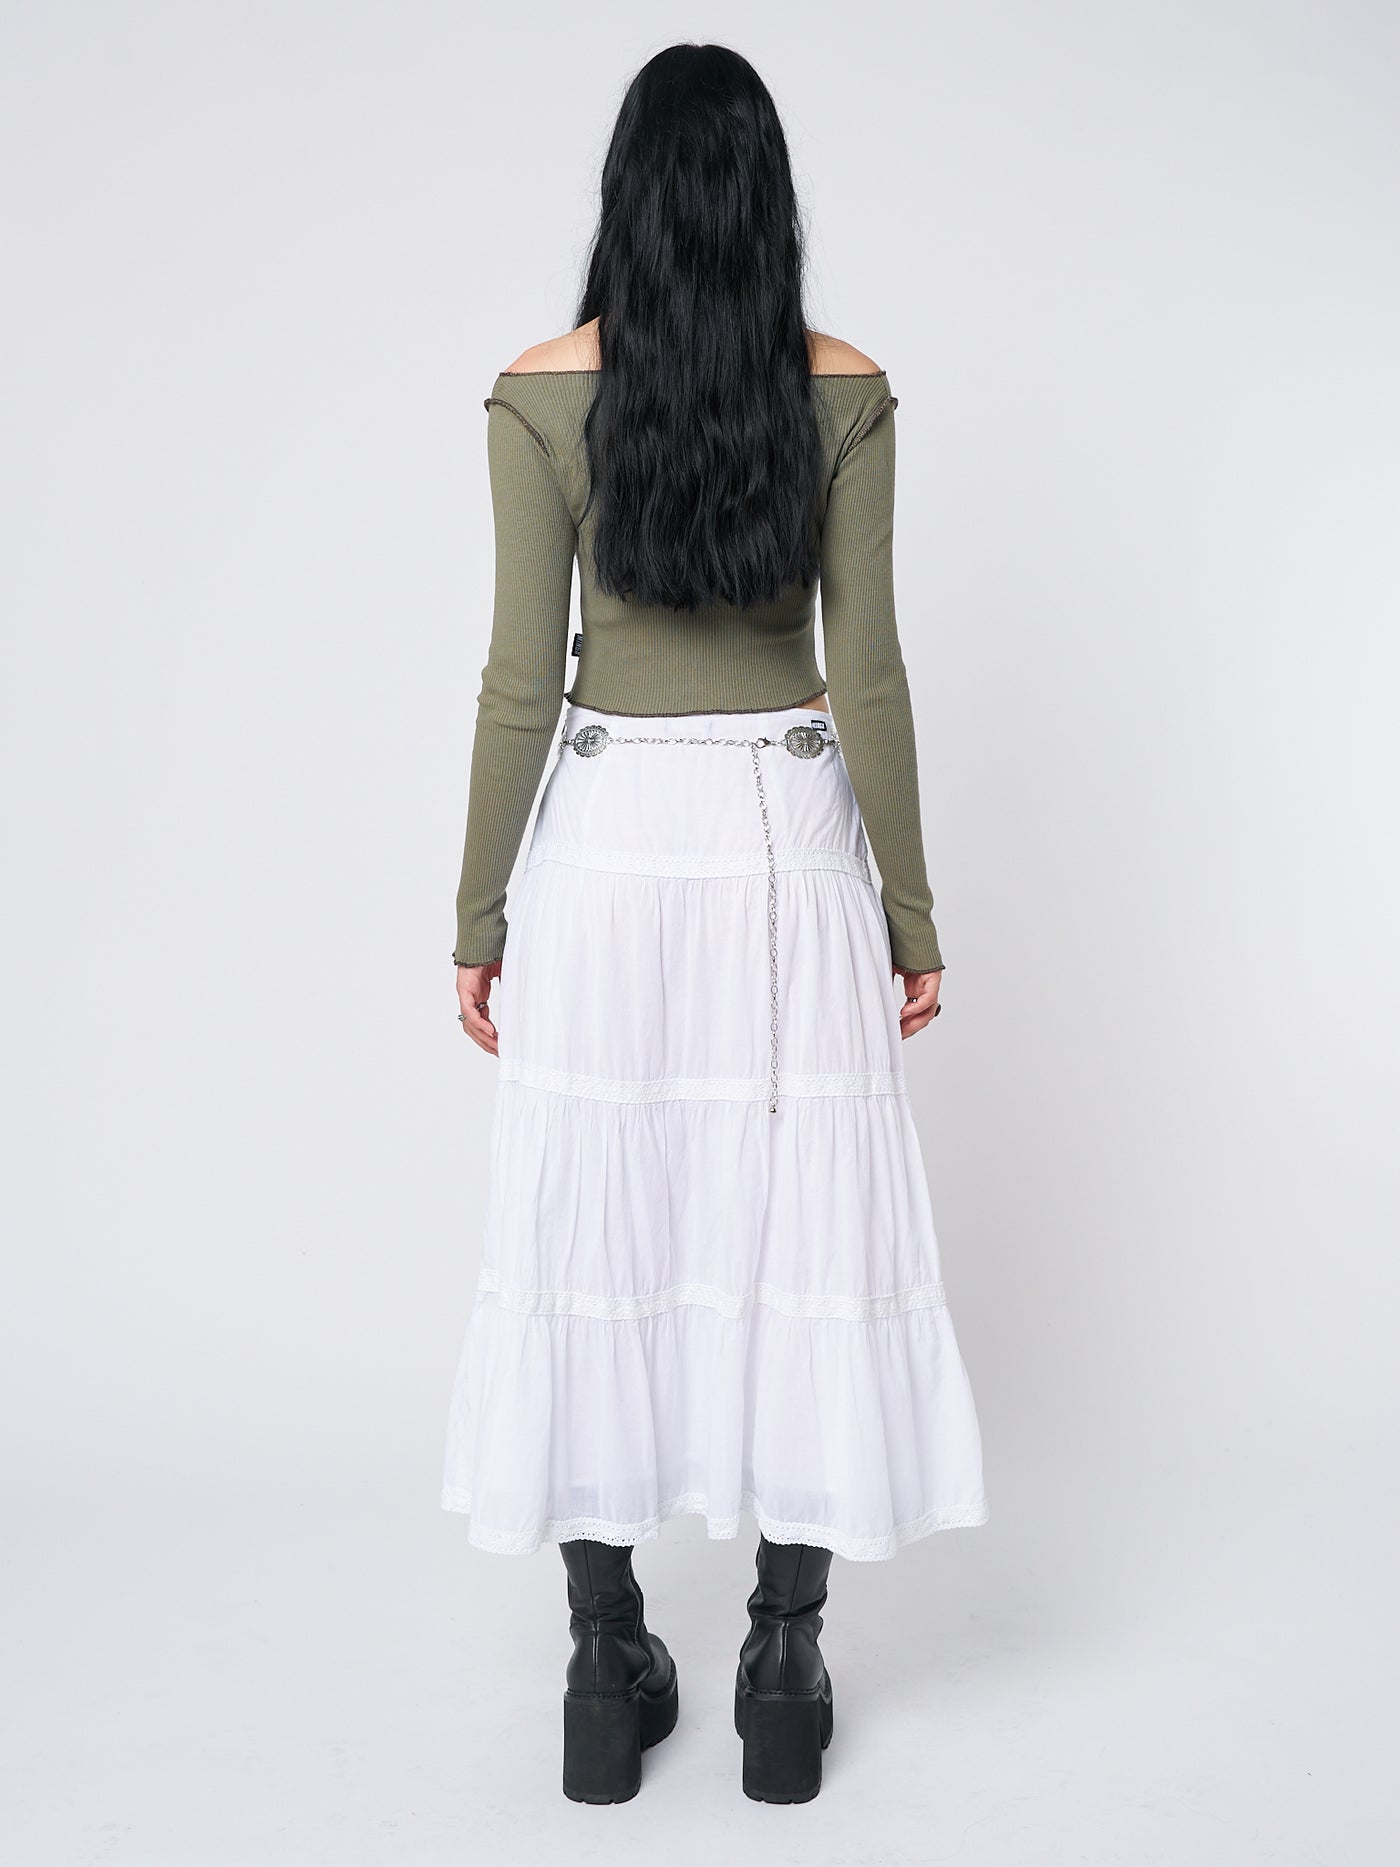 Discover 154+ long ruffle skirt